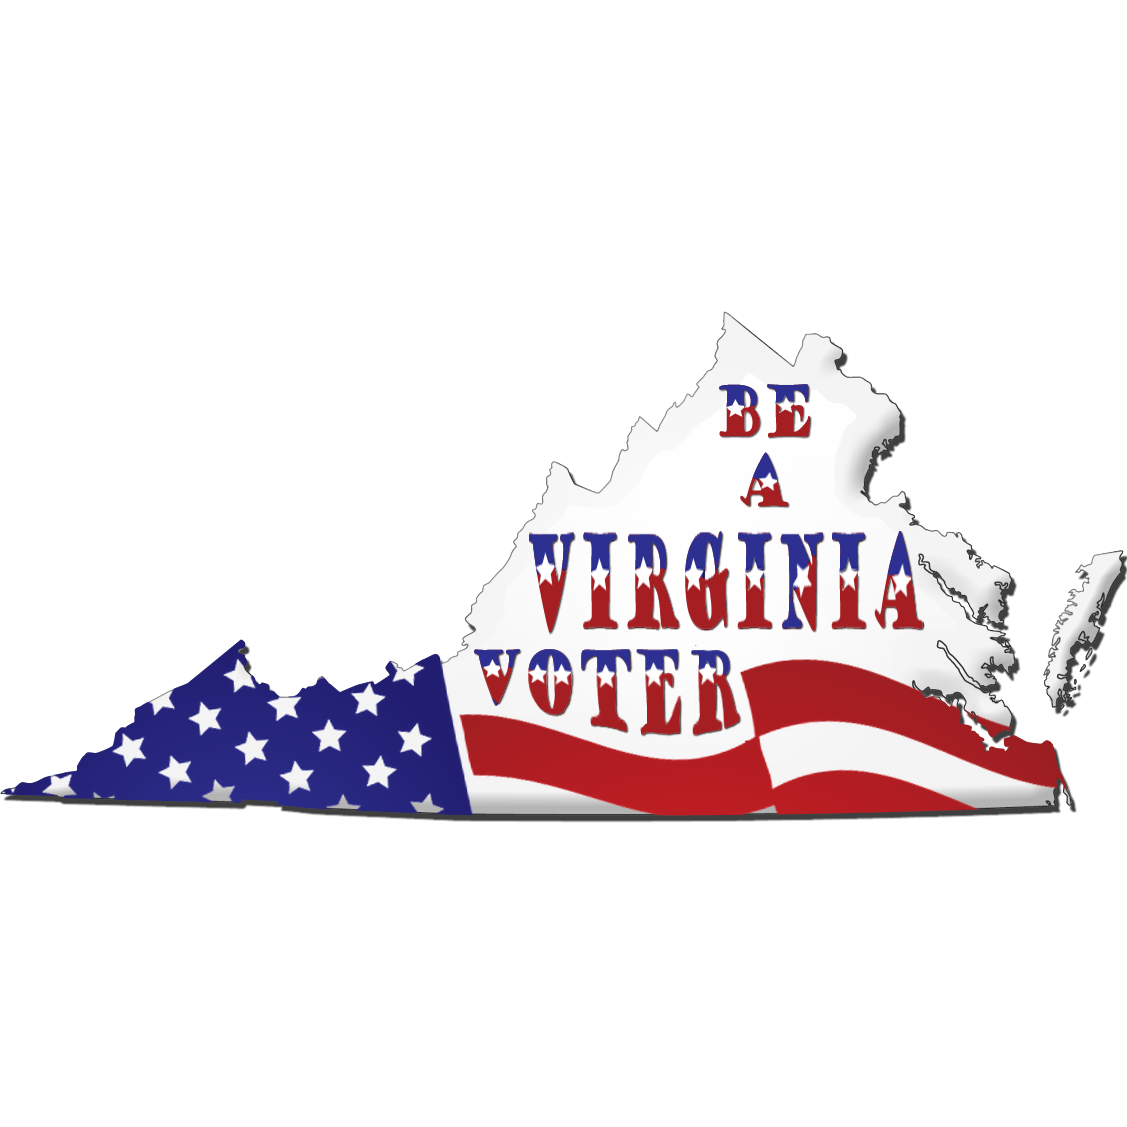 Get Set To Vote, Virginia!